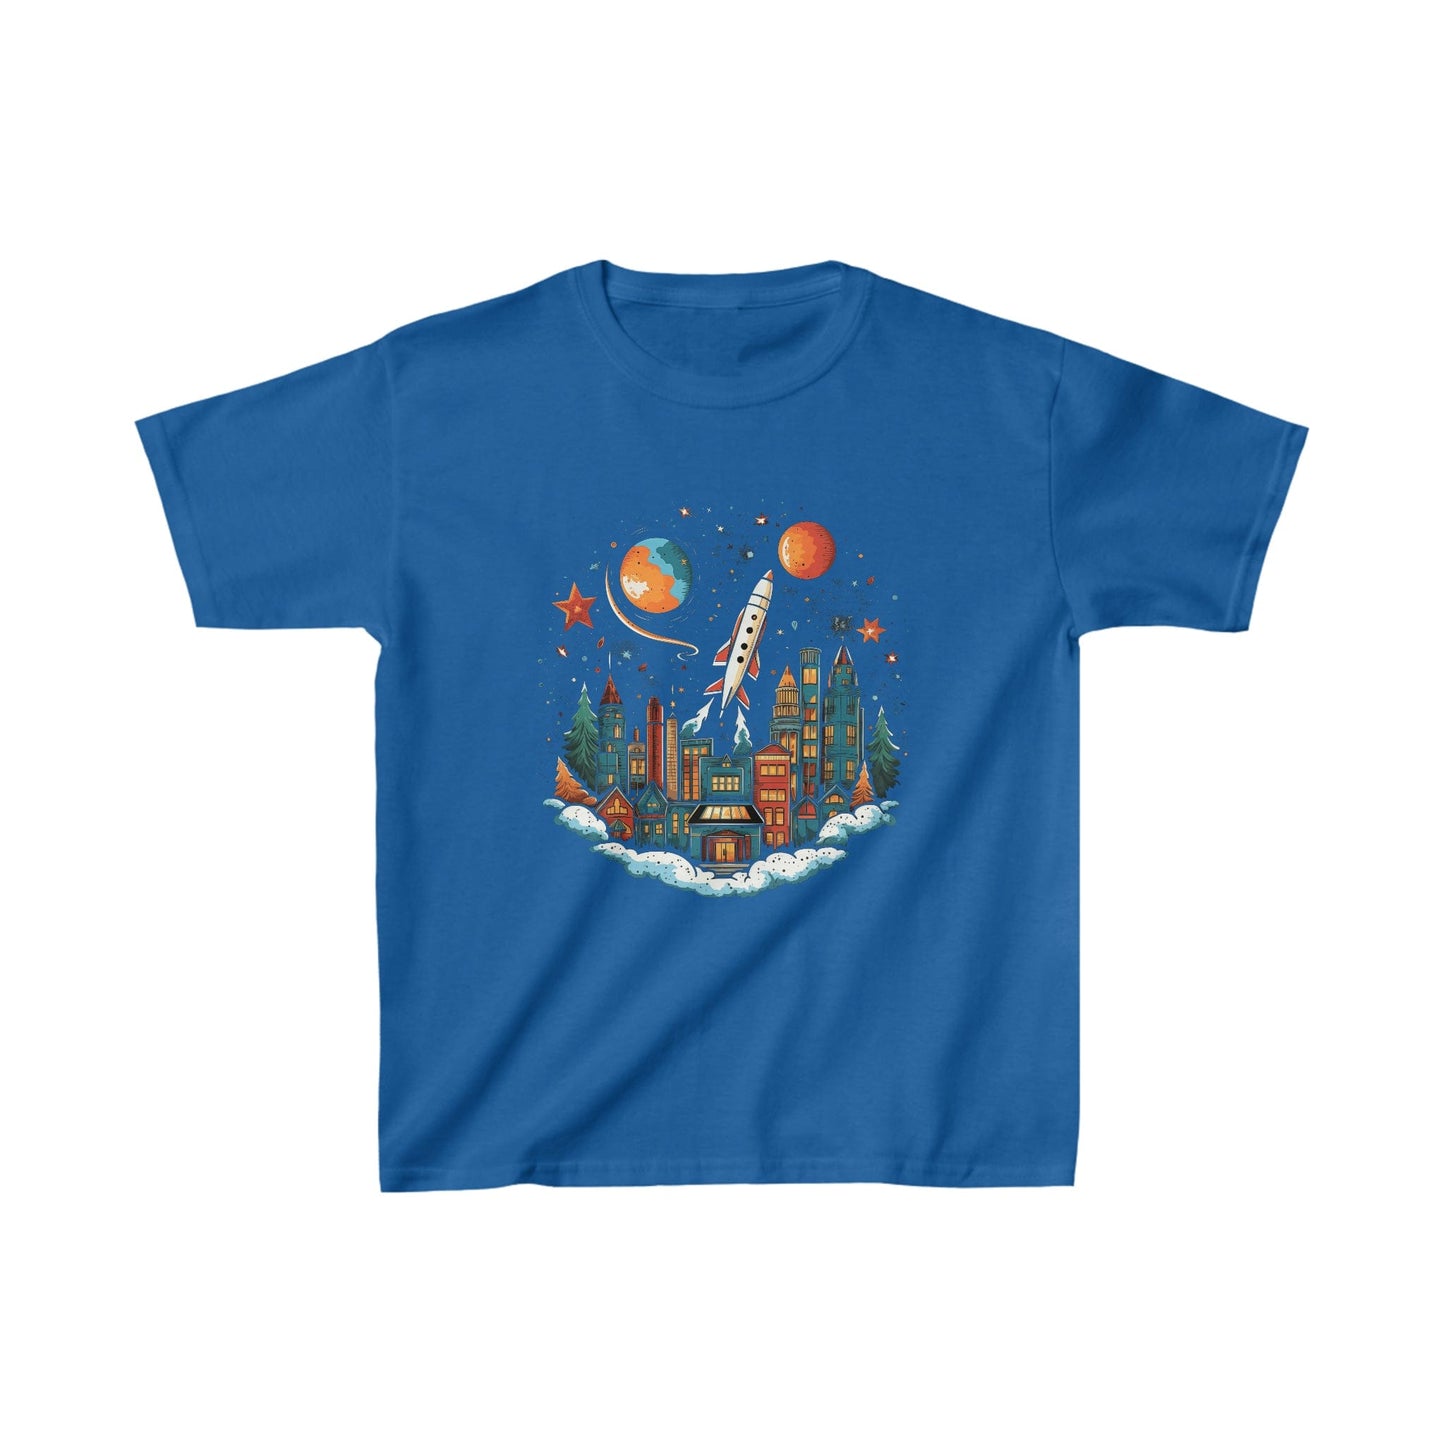 Kids clothes XS / Royal Youth Holiday Rocket Launch T-Shirt